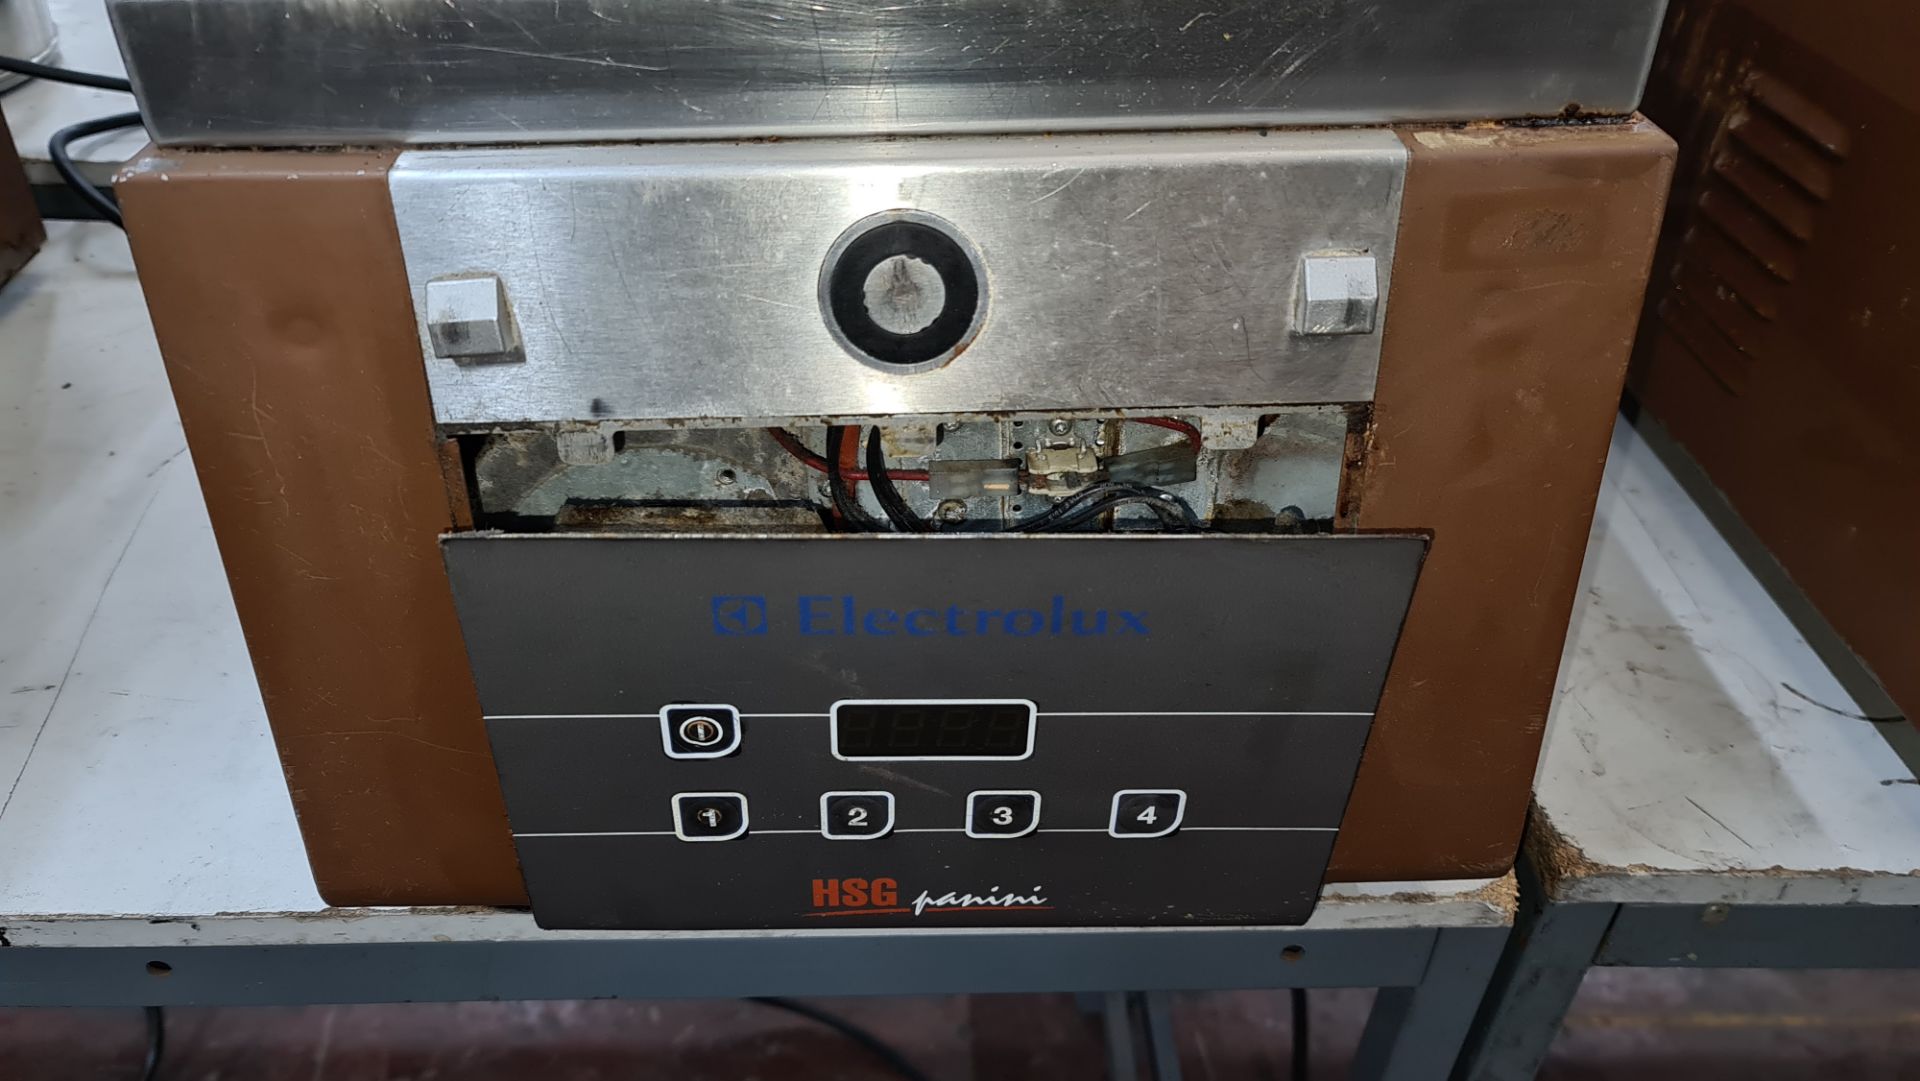 Electrolux HSG panini machine model HSPP - Image 5 of 5